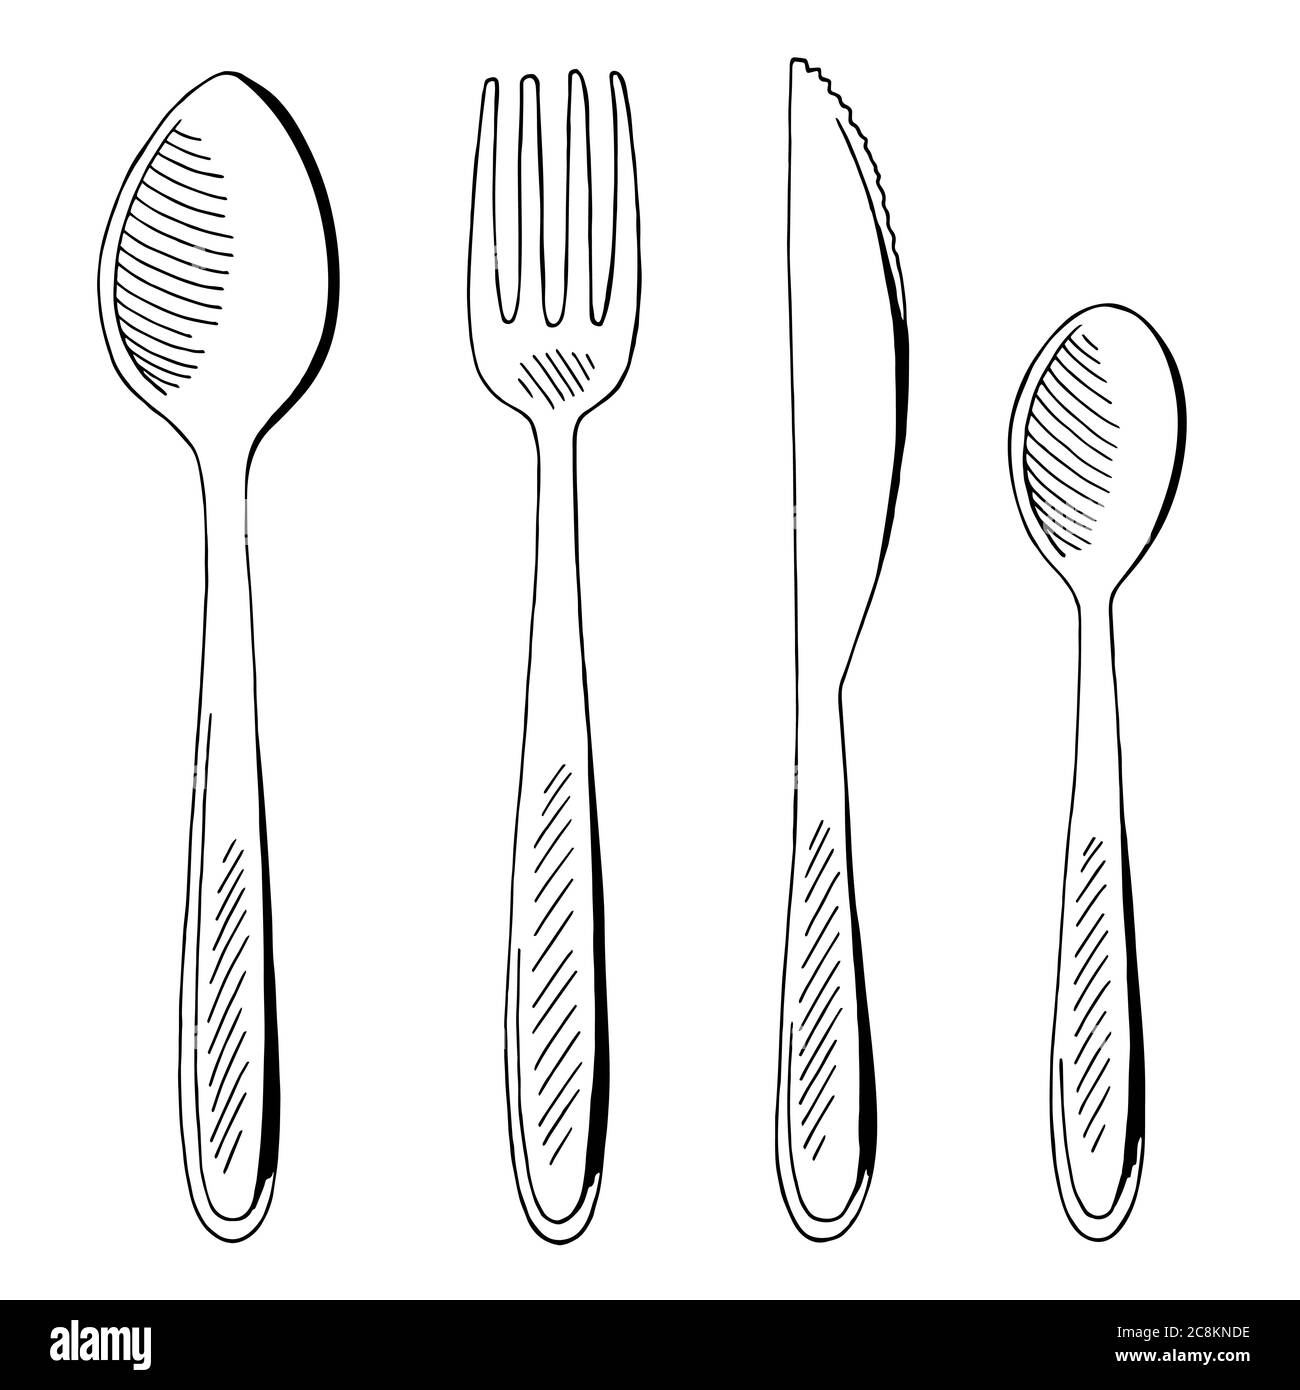 770 Knife And Fork Crossed Illustrations RoyaltyFree Vector Graphics   Clip Art  iStock  Food